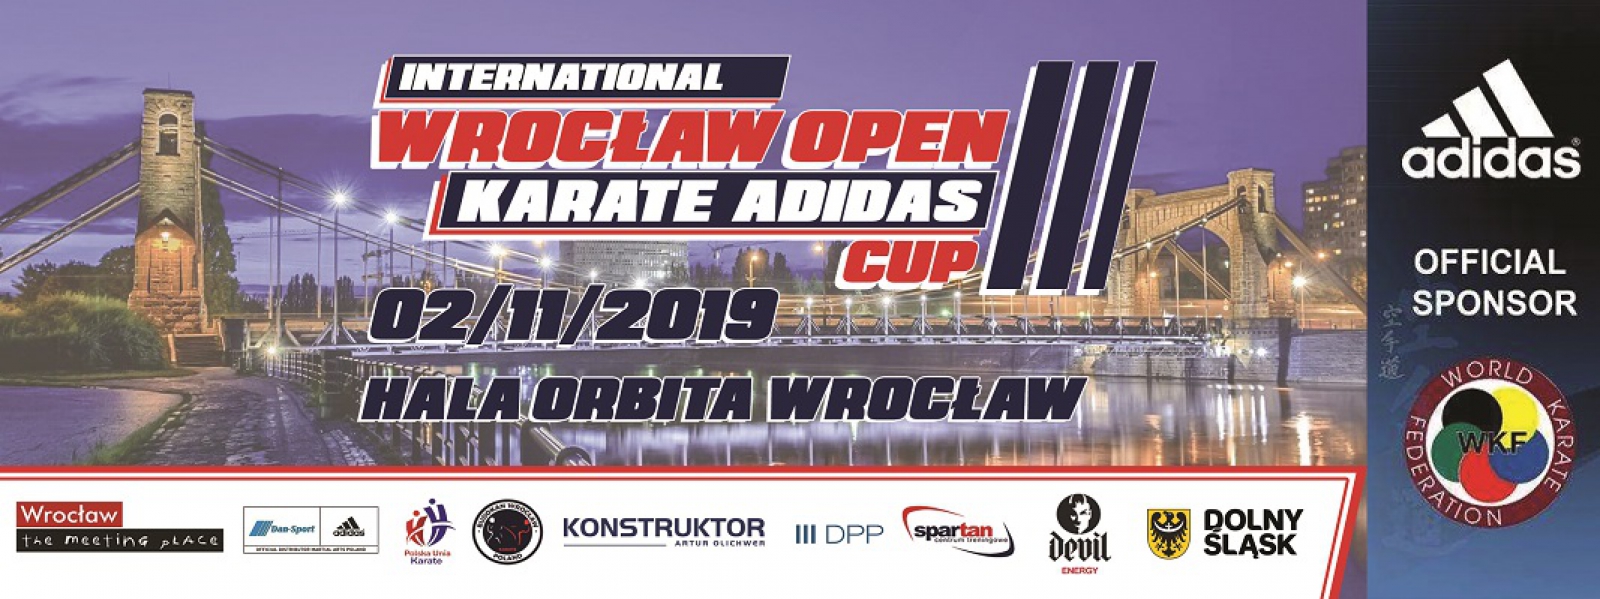 SET Online Poland: INTERNATIONAL KARATE WROCLAW OPEN - ADIDAS CUP